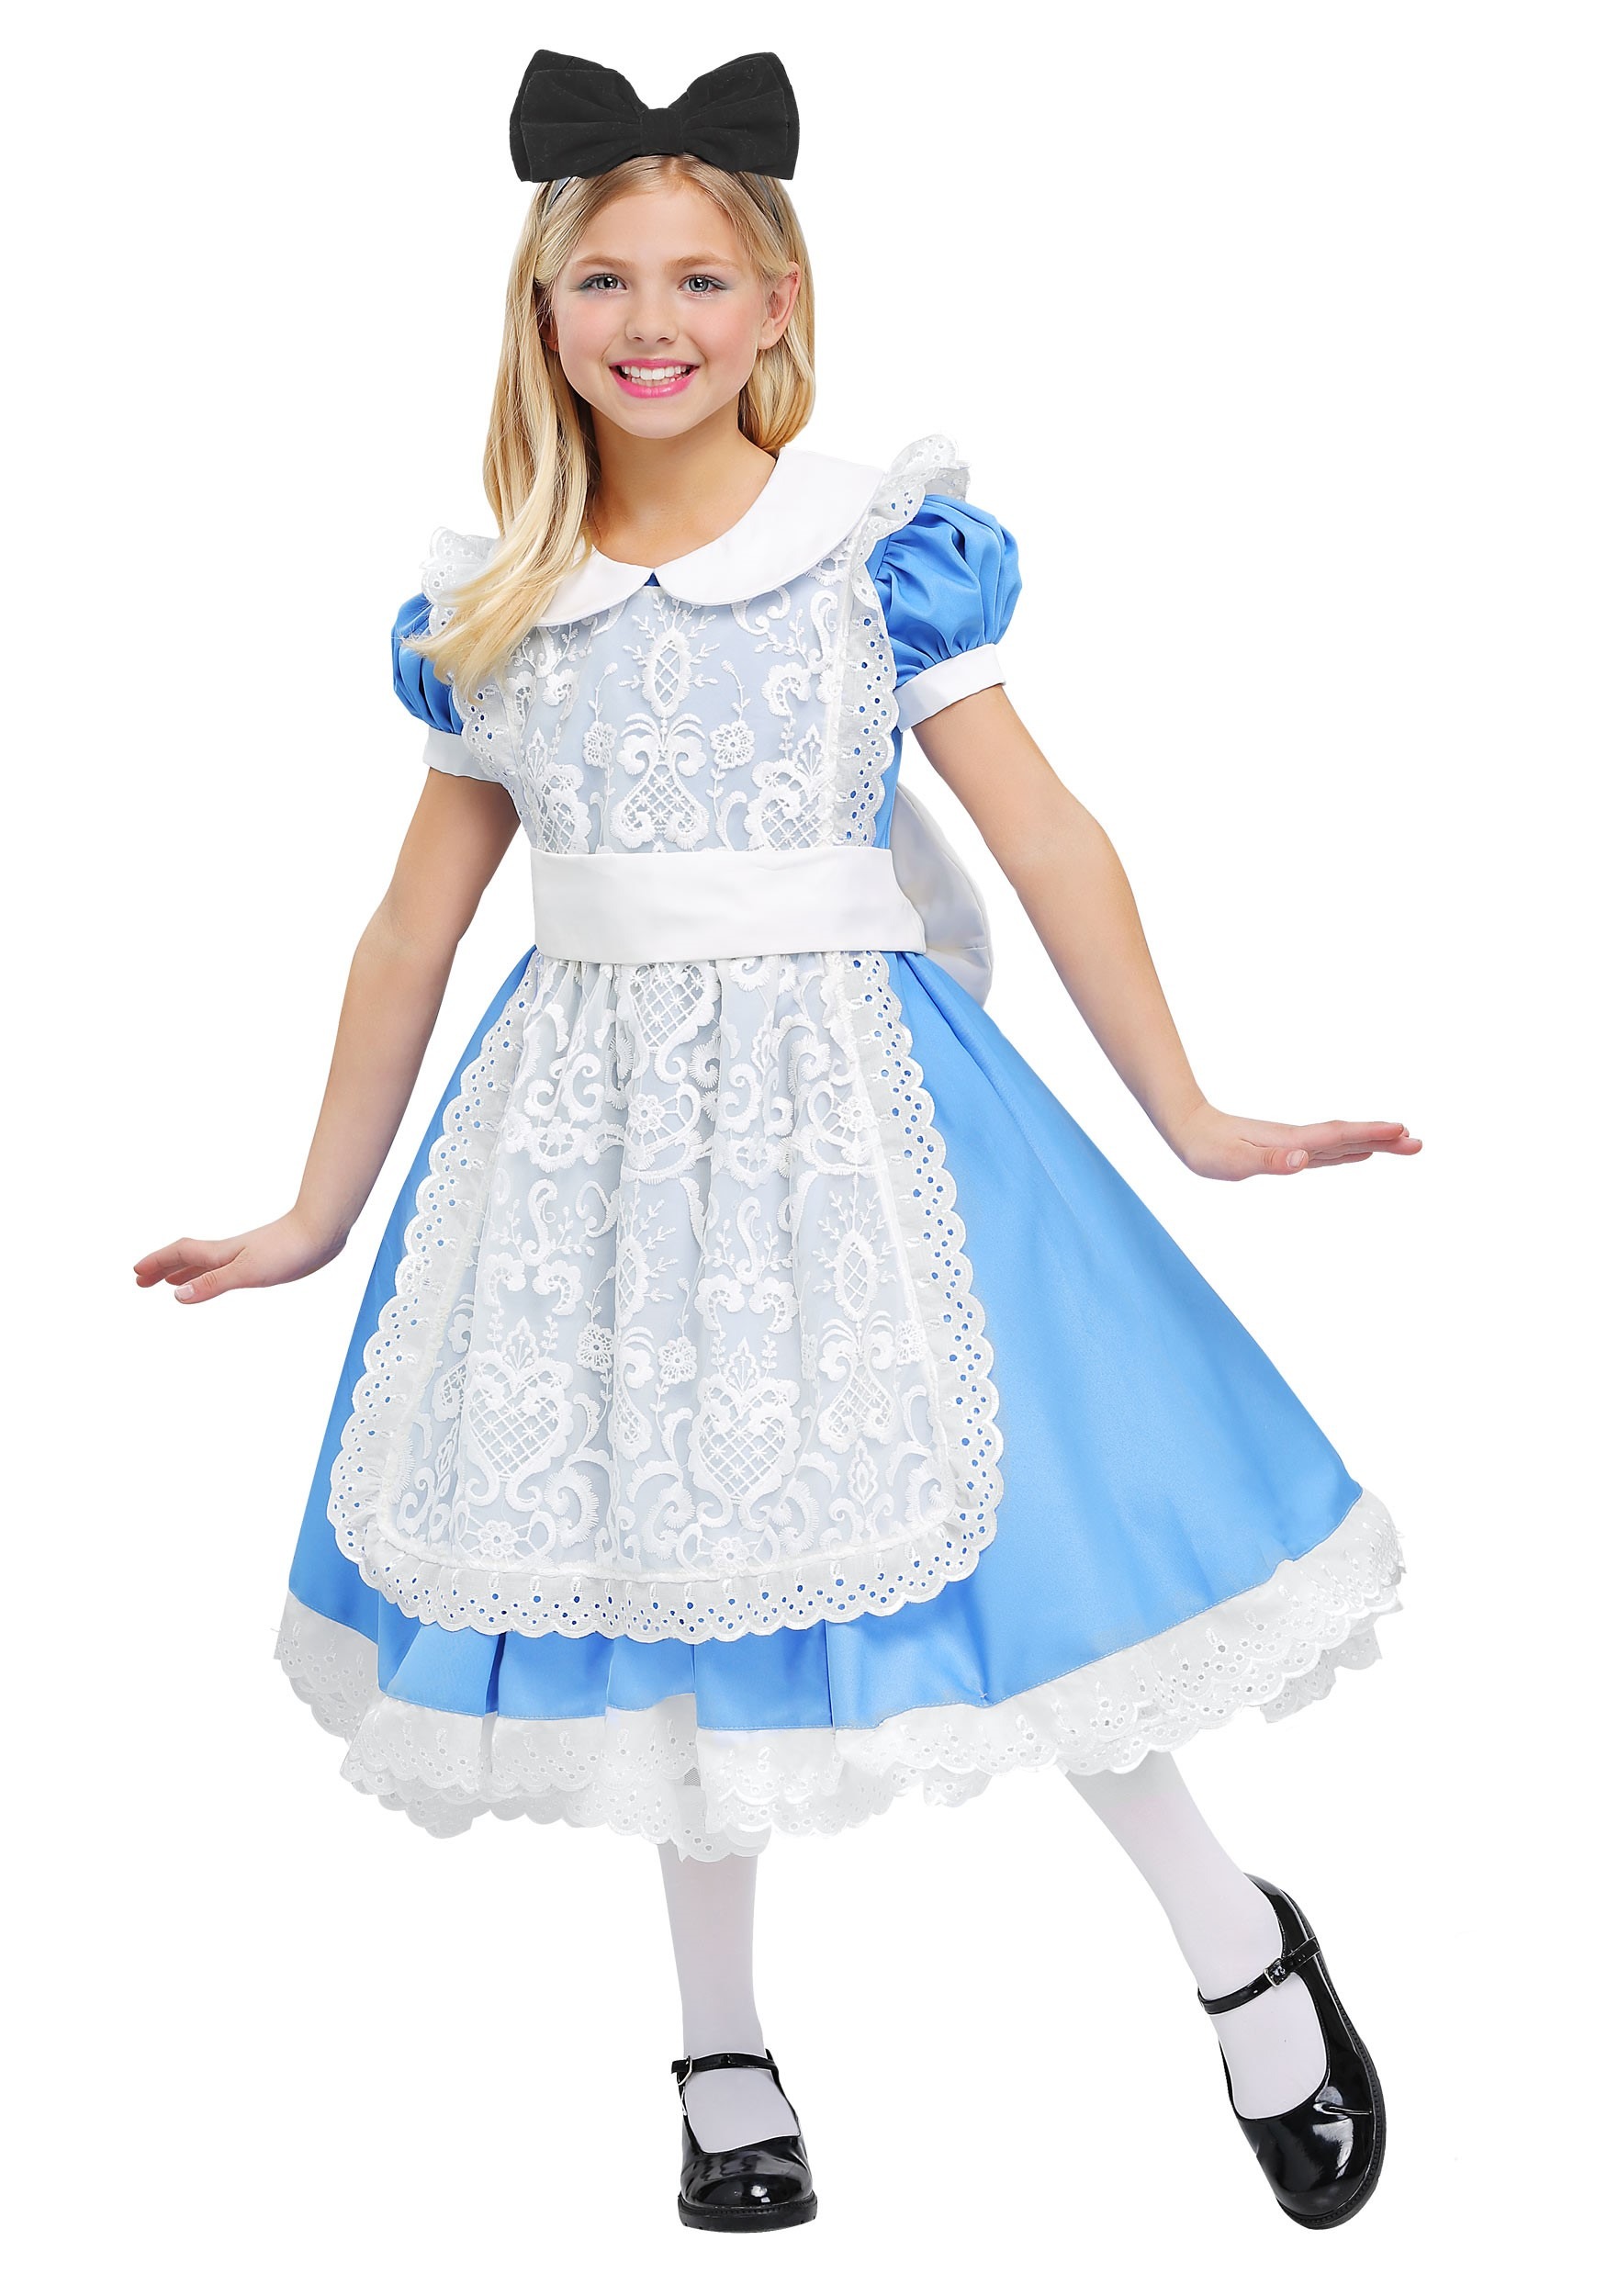 Photos - Fancy Dress Elite FUN Costumes  Alice Costume for Girls Blue/White FUN6205CH 